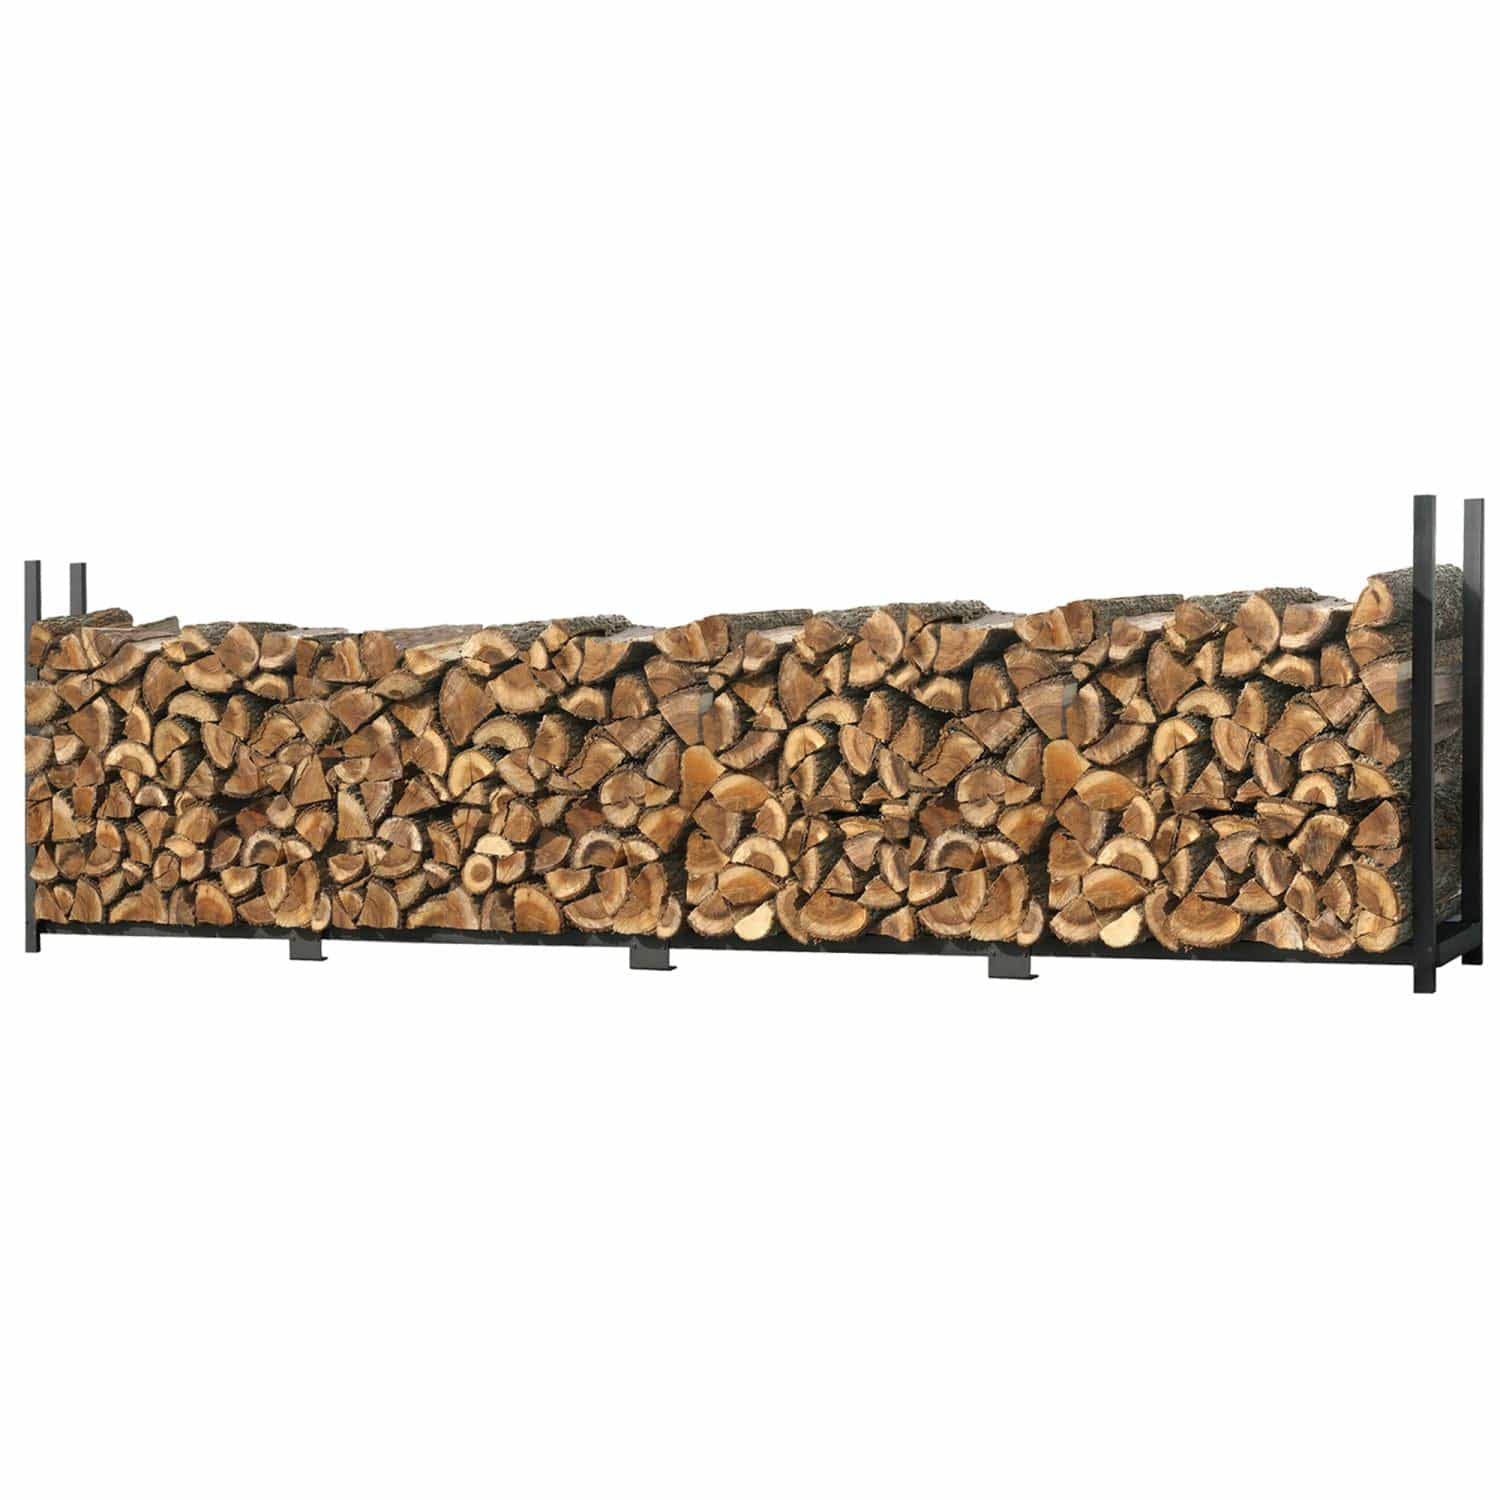 ShelterLogic Firewood & Hearth Products ShelterLogic | Ultra Duty Firewood Rack 16 ft. Without Cover 90469